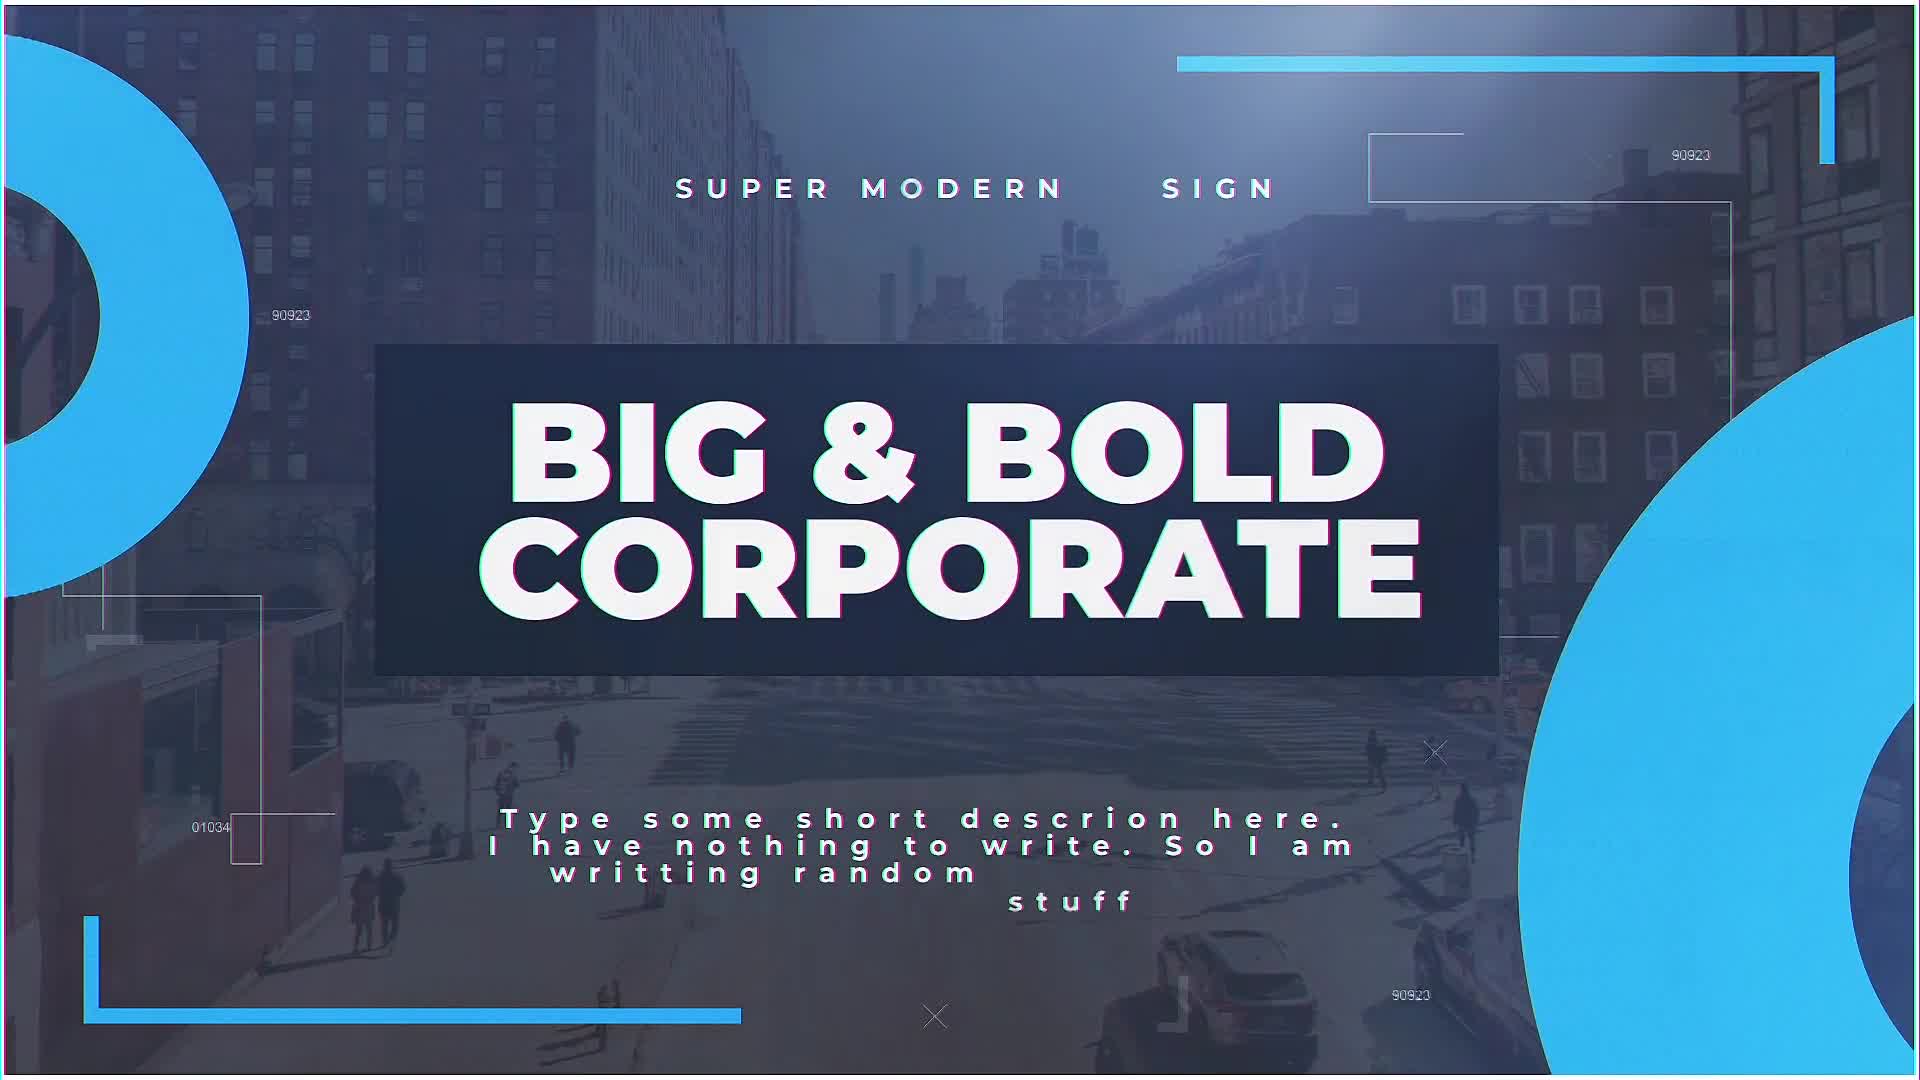 Big & Bold Corporate - Download Videohive 23338385